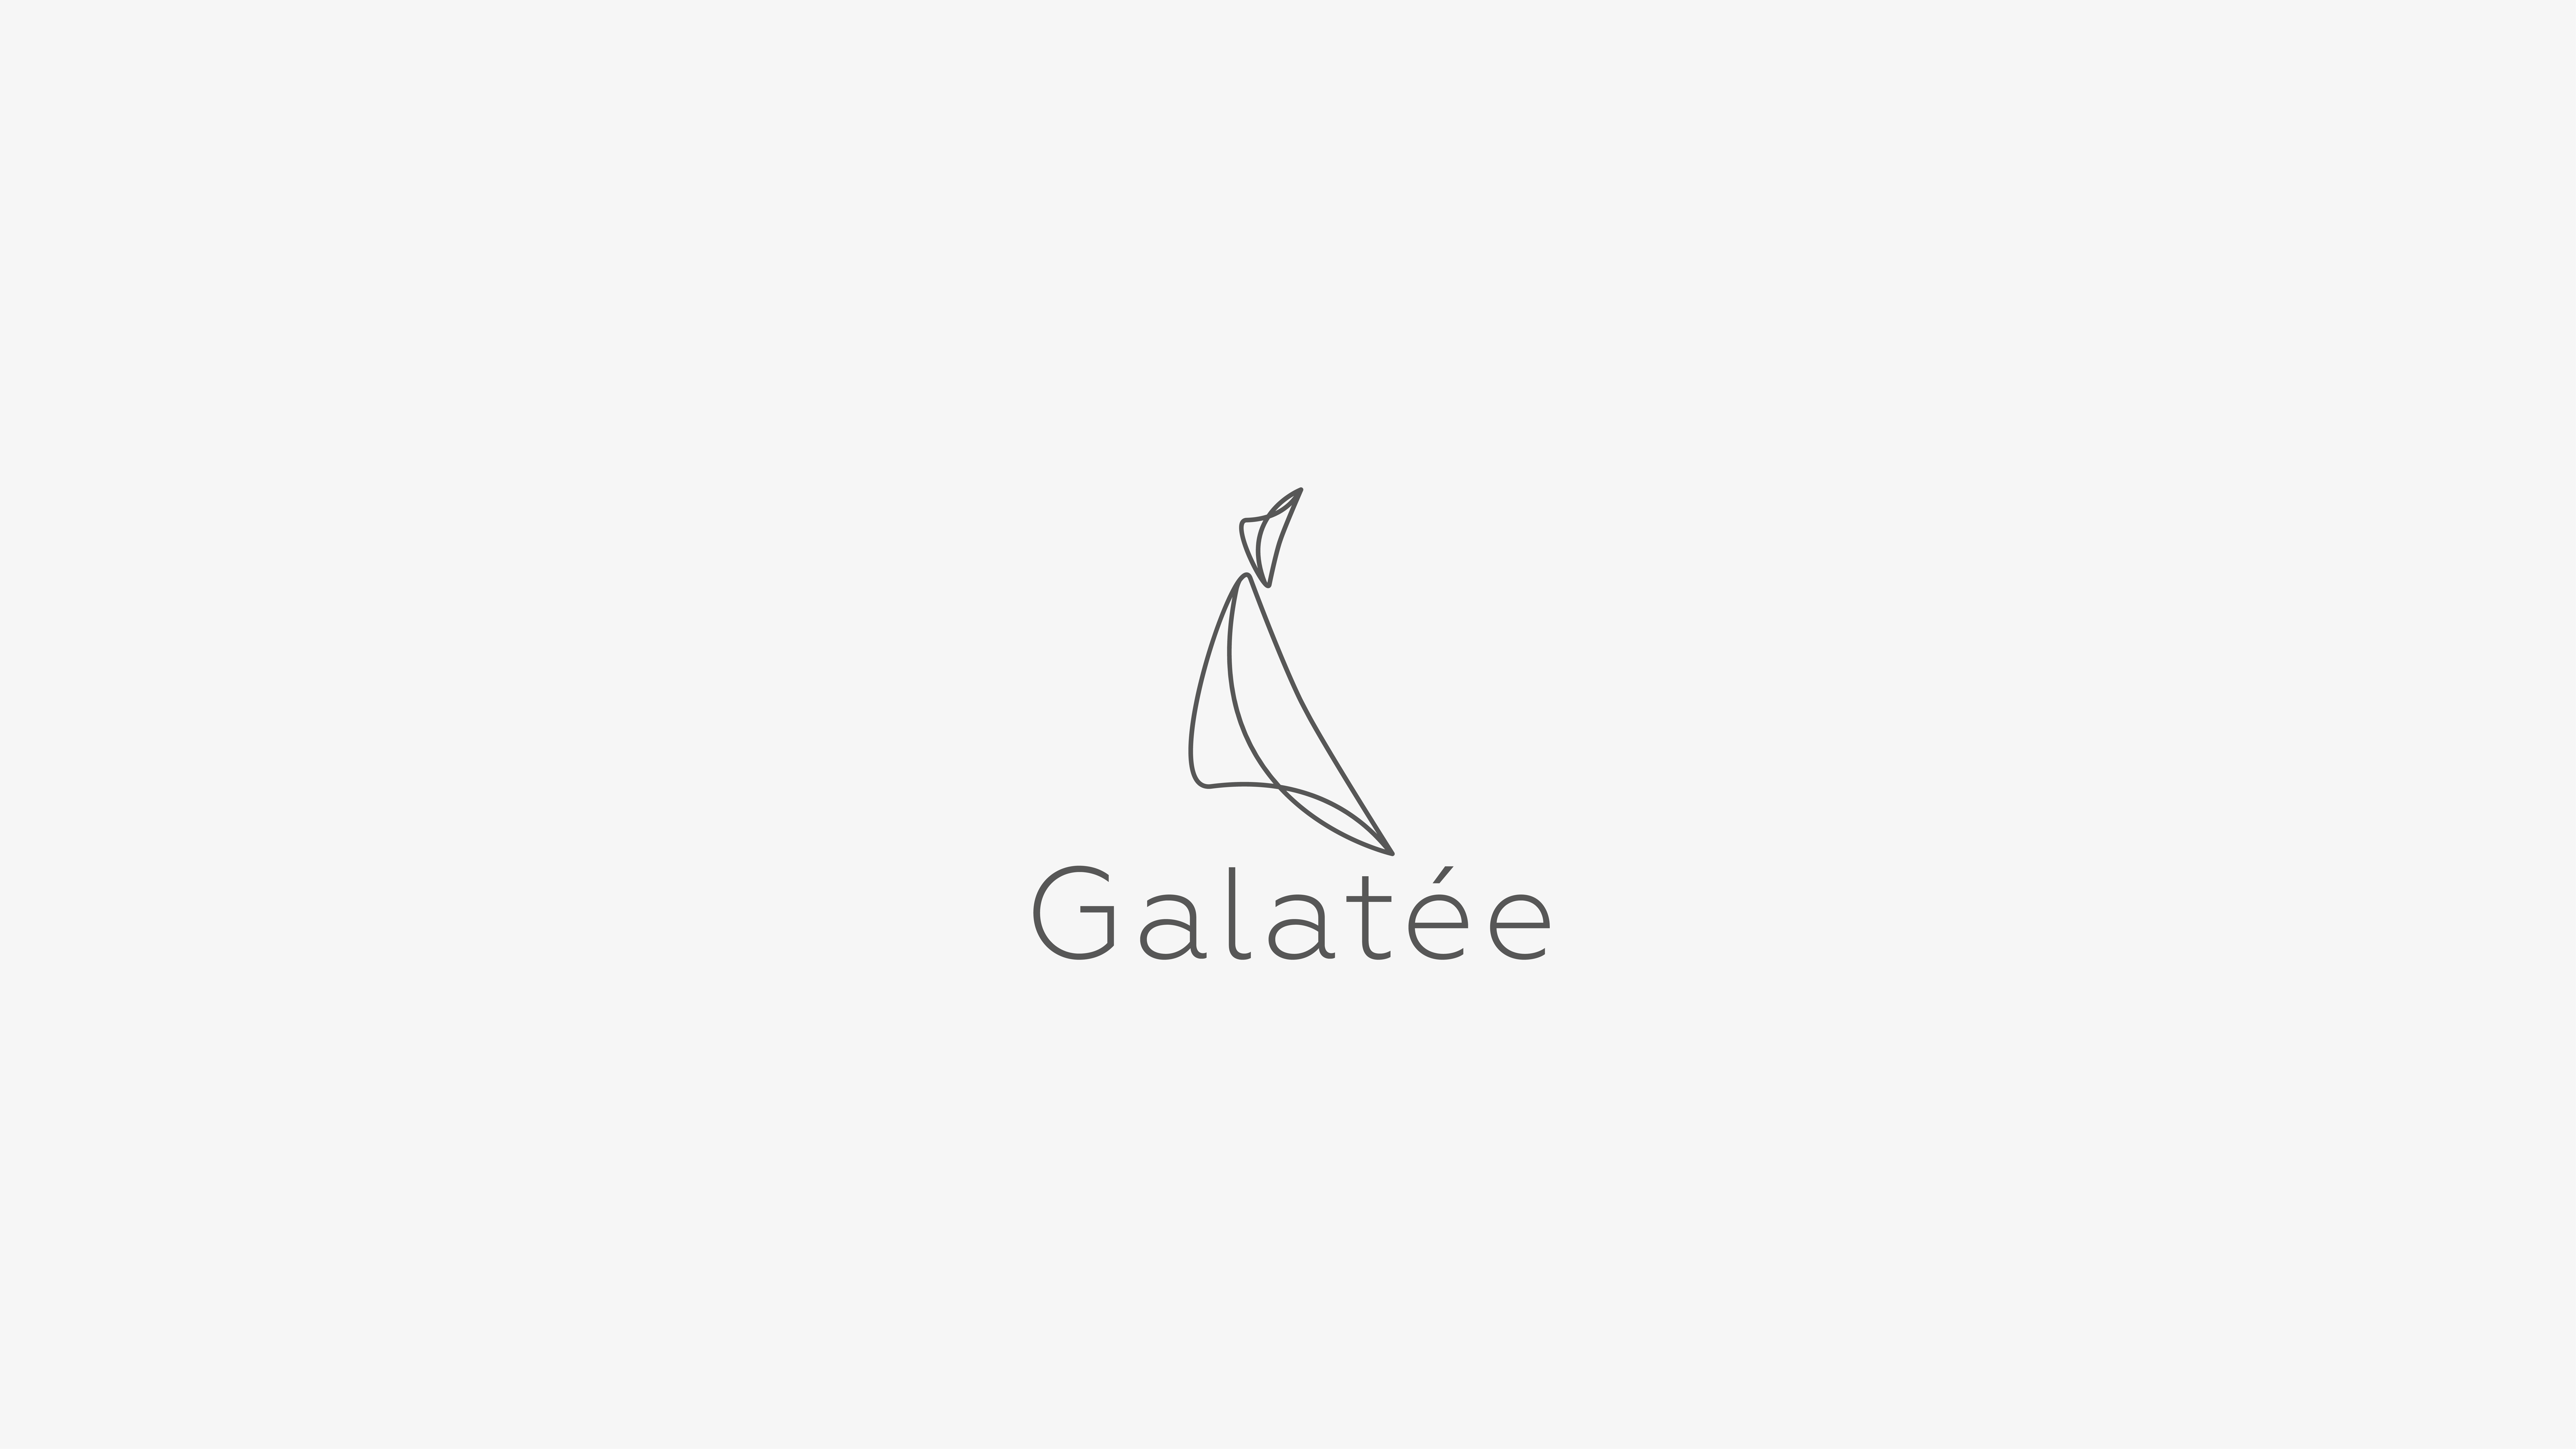 Galatee logo